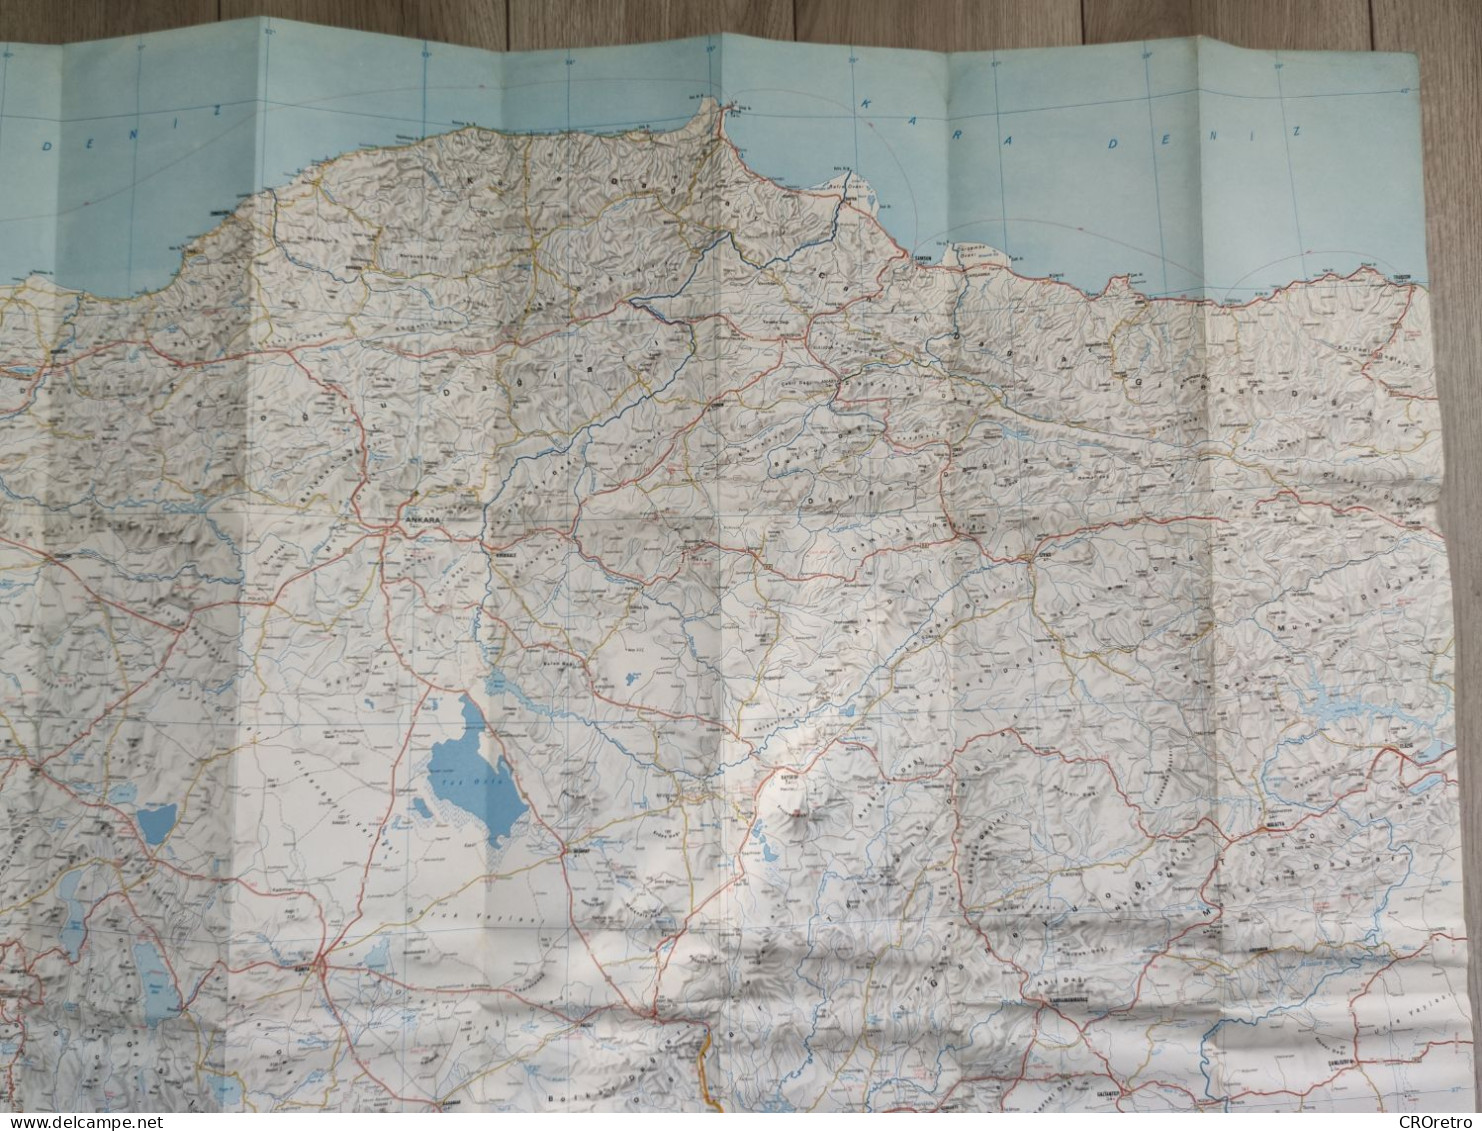 TURKEY / CYPRUS, vintage road map, autokarte, 81×118 cm